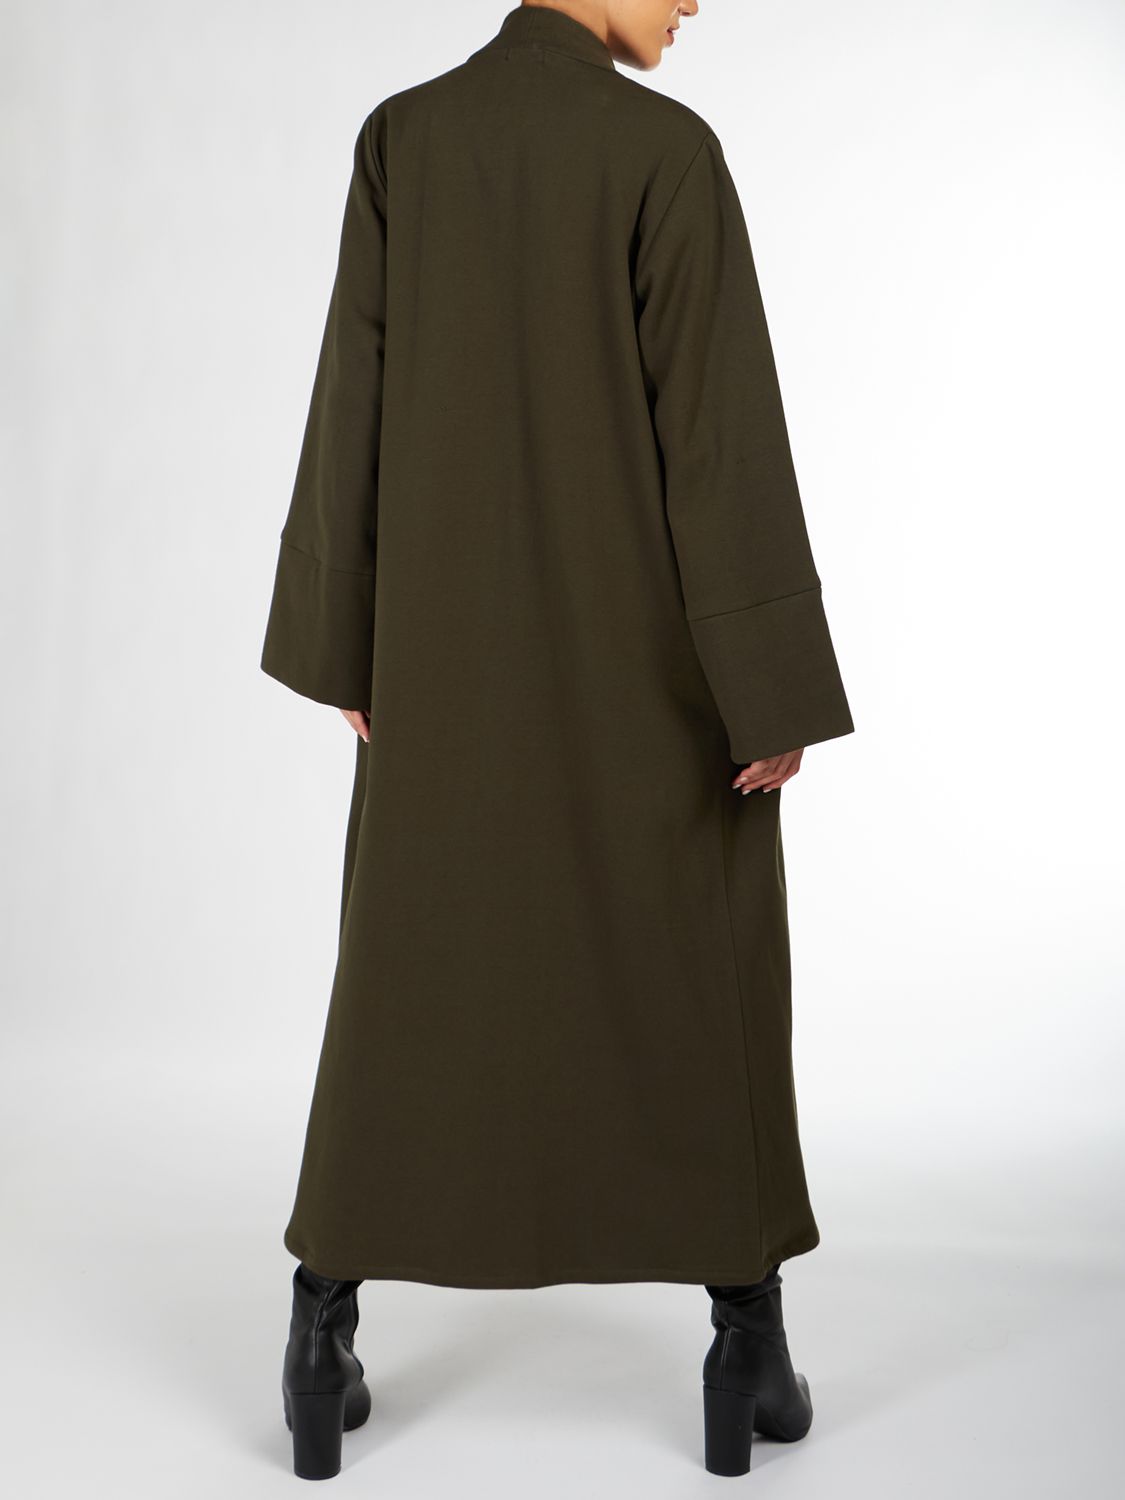 Buy Aab Loose Fit Fleece Cover Up, Olive Online at johnlewis.com